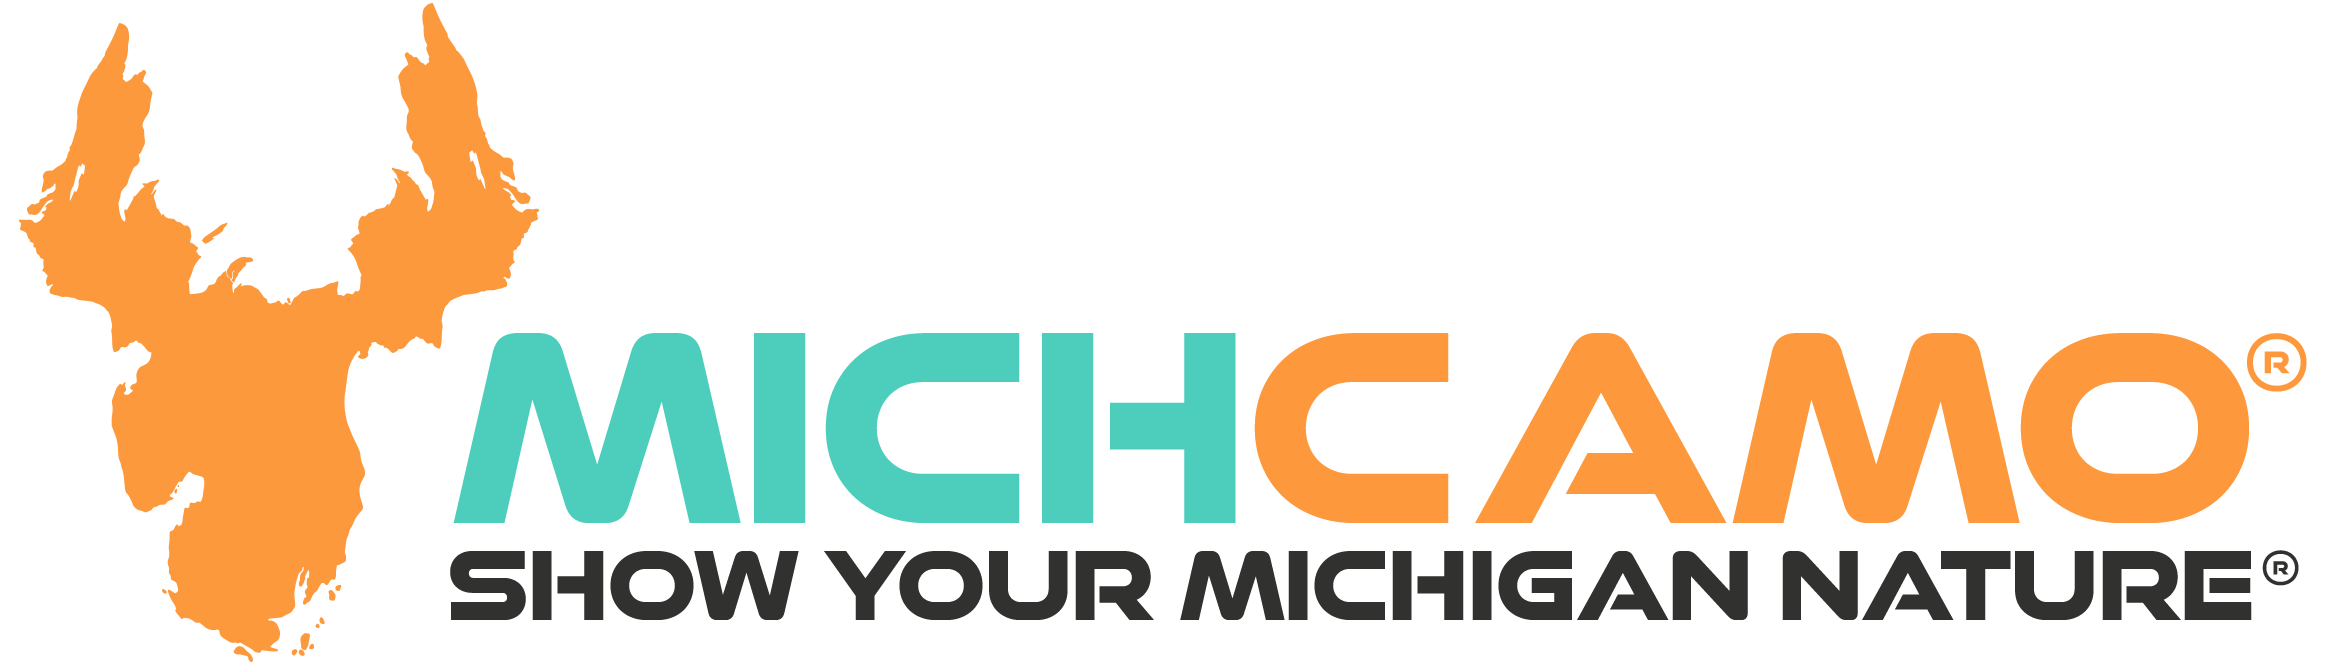 merch michcamo full color website logo